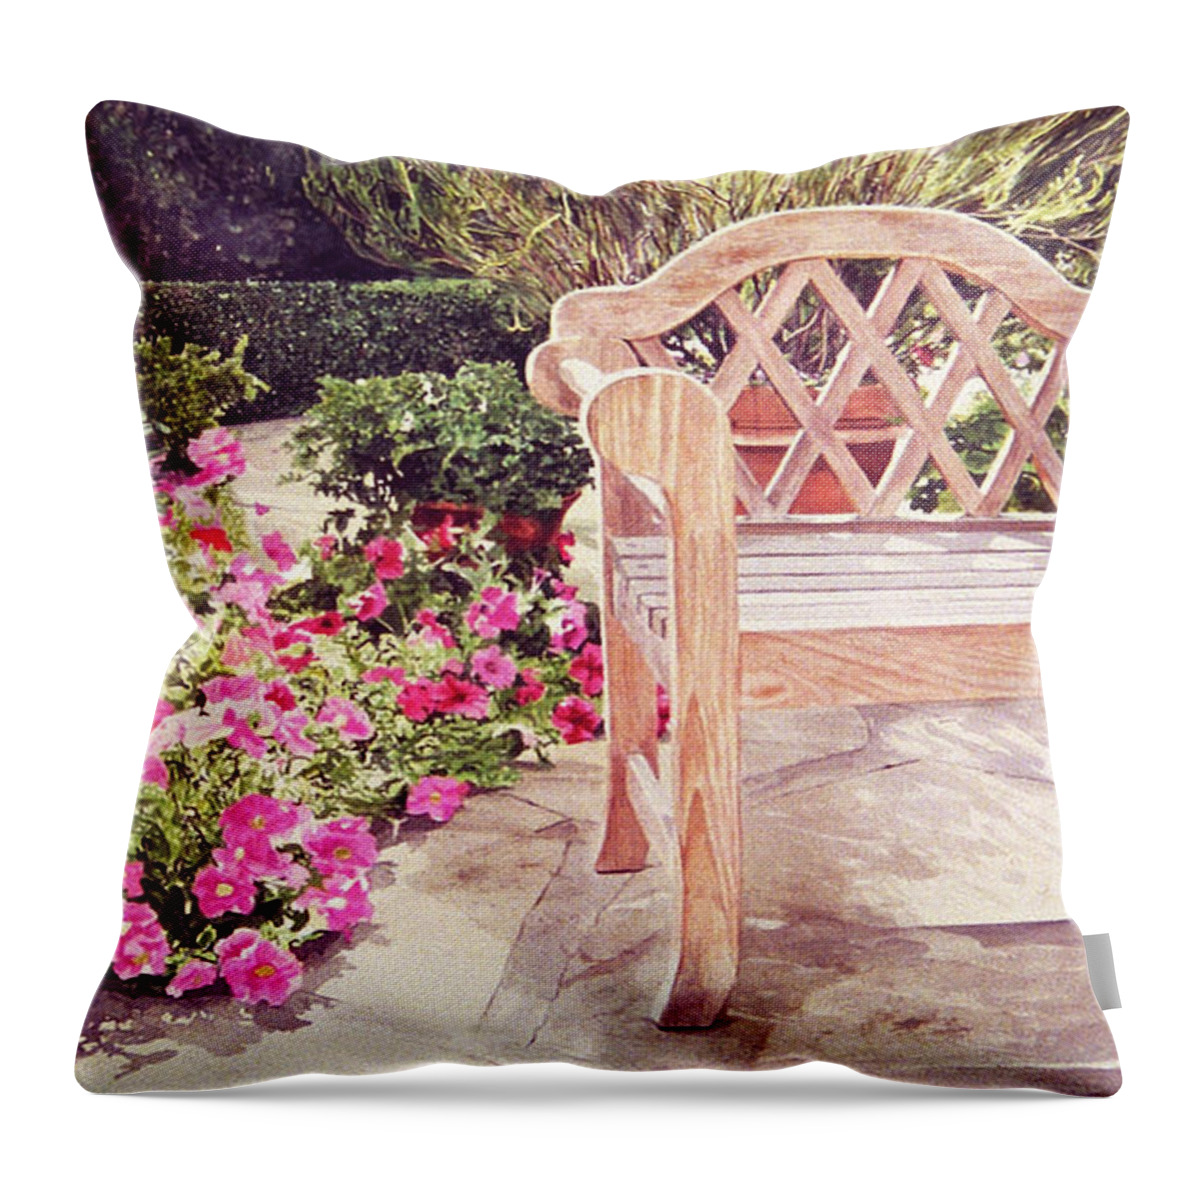 Garden Chair Throw Pillow featuring the painting California Sunchair by David Lloyd Glover